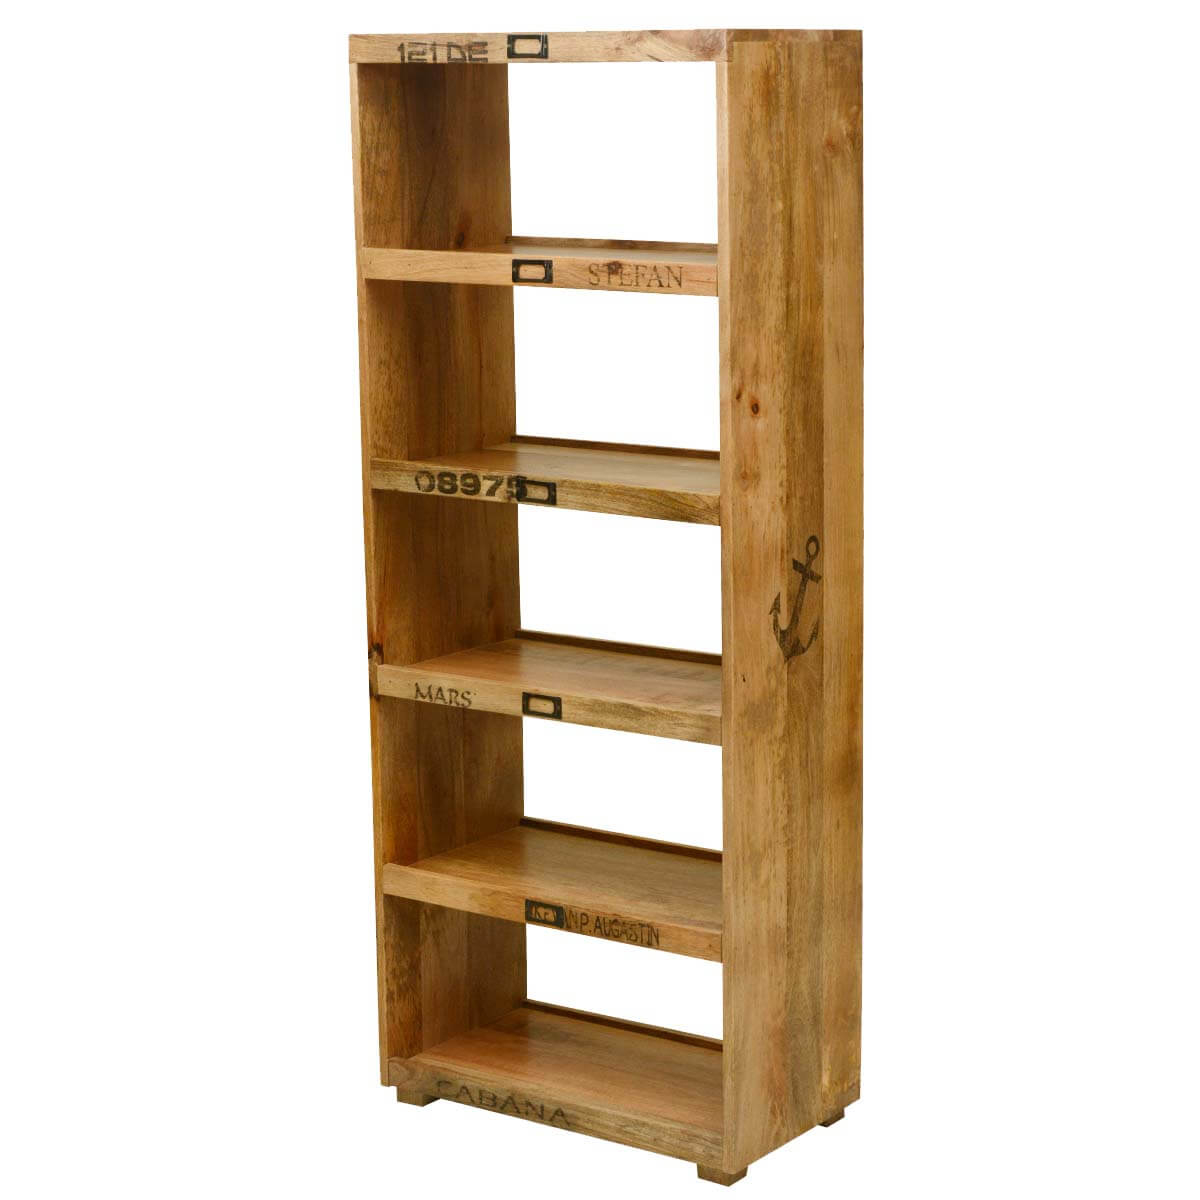 Morelia 5 Open Shelf Rustic Solid Wood Tall Narrow Bookcase regarding size 1200 X 1200